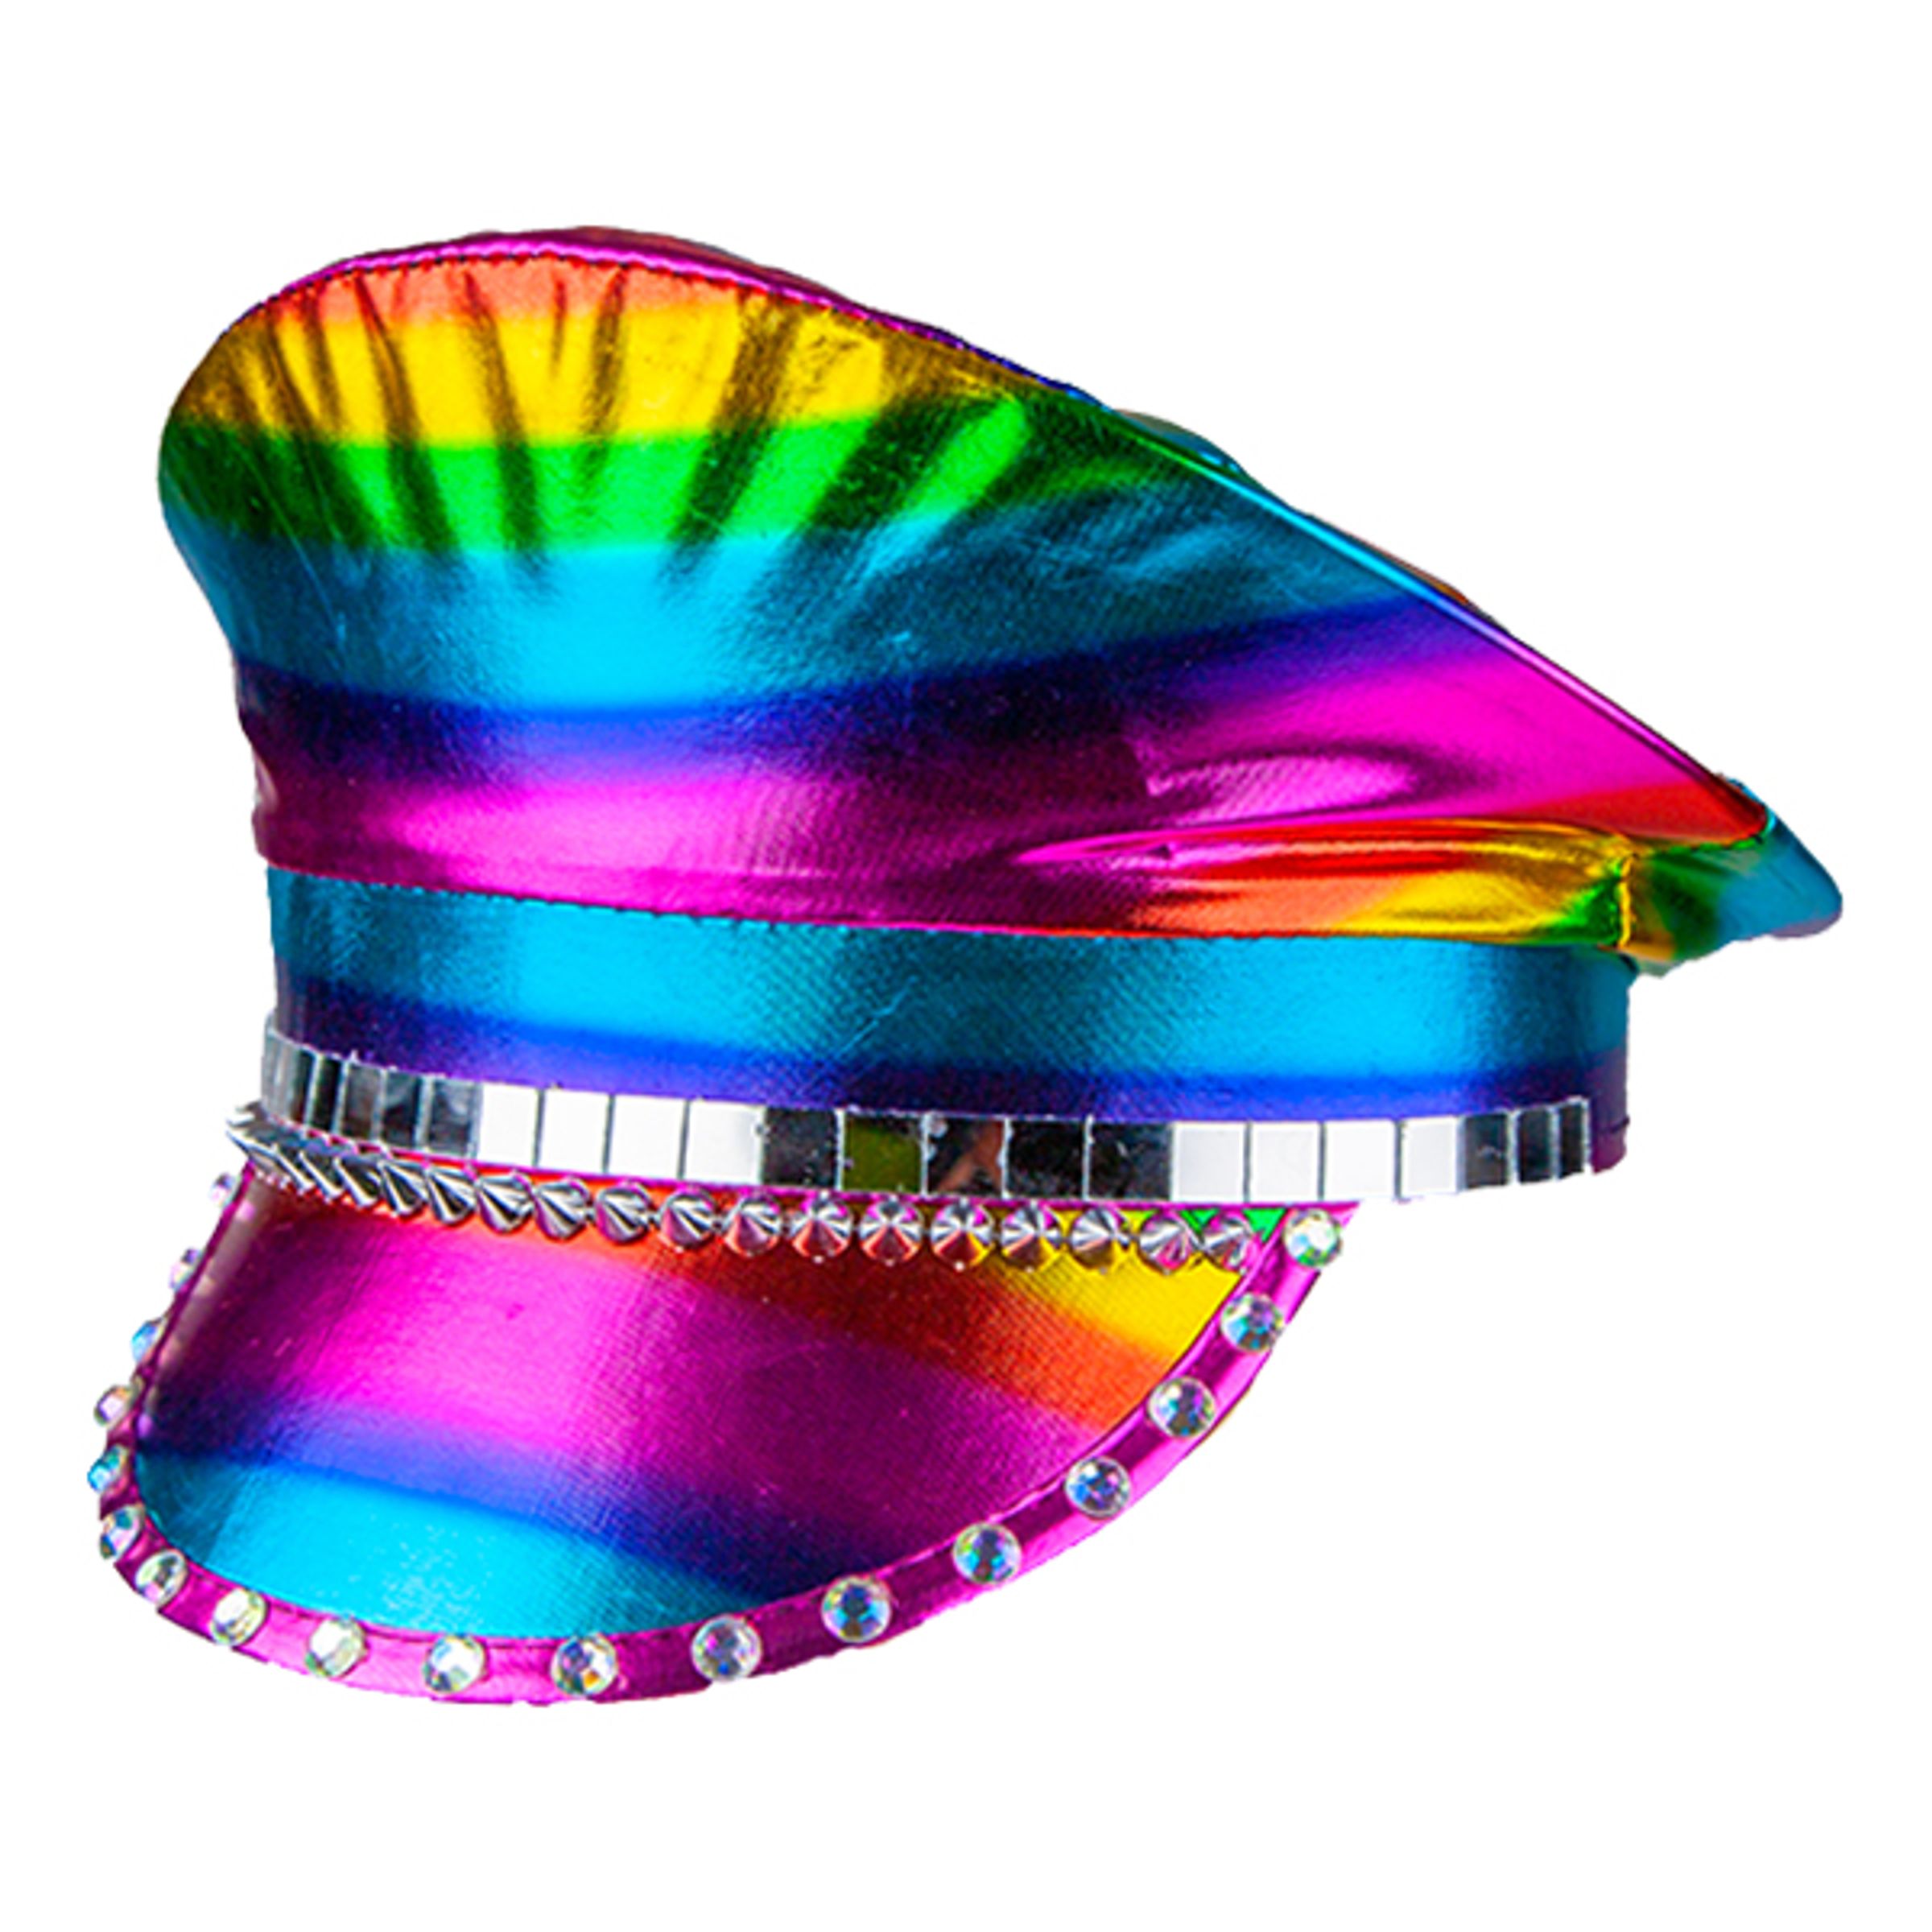 Deluxe Kapten Hatt Rainbow - One size